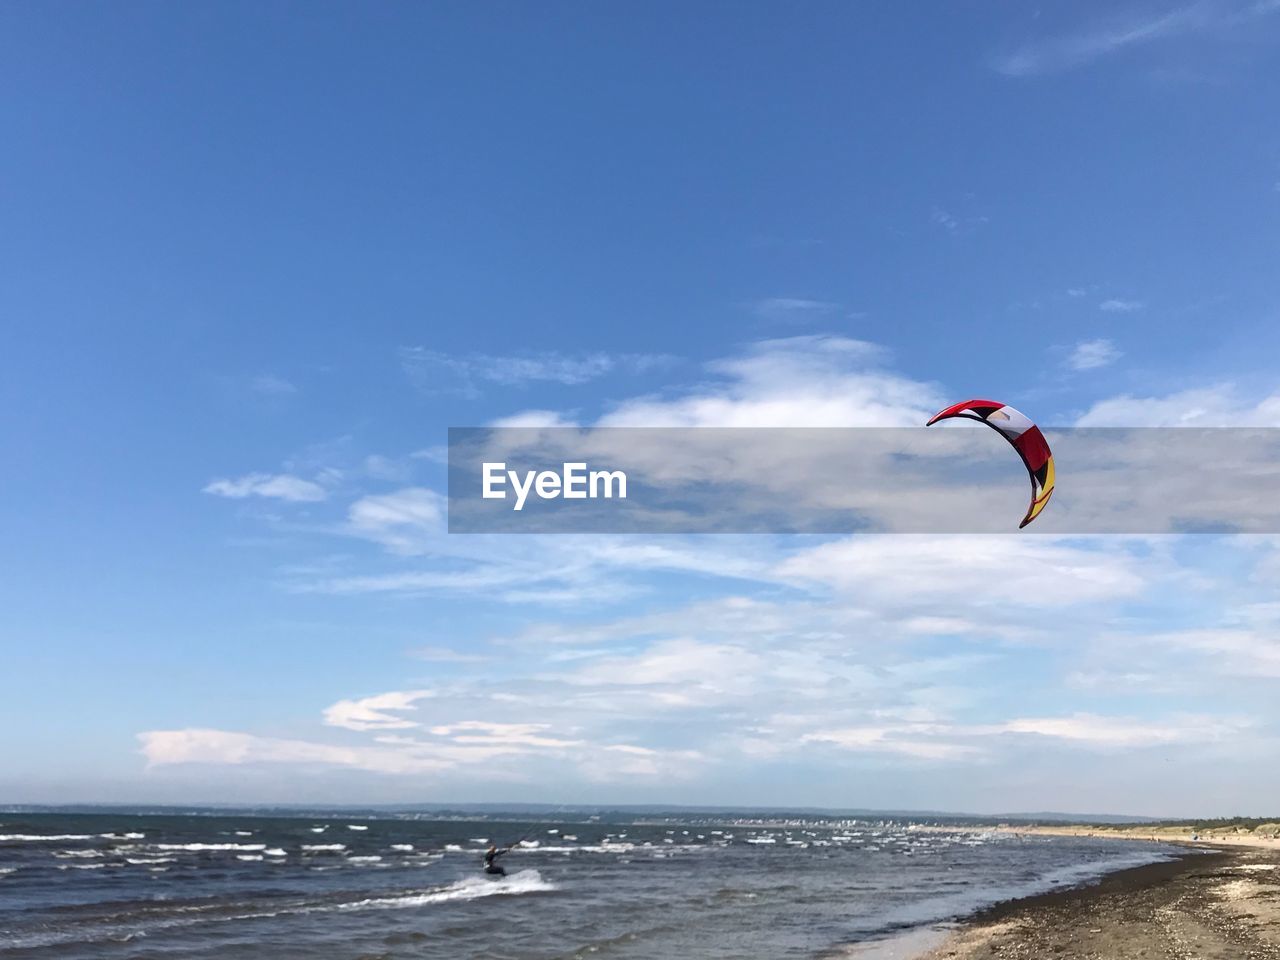 WOMAN FLYING OVER BEACH AGAINST SKY